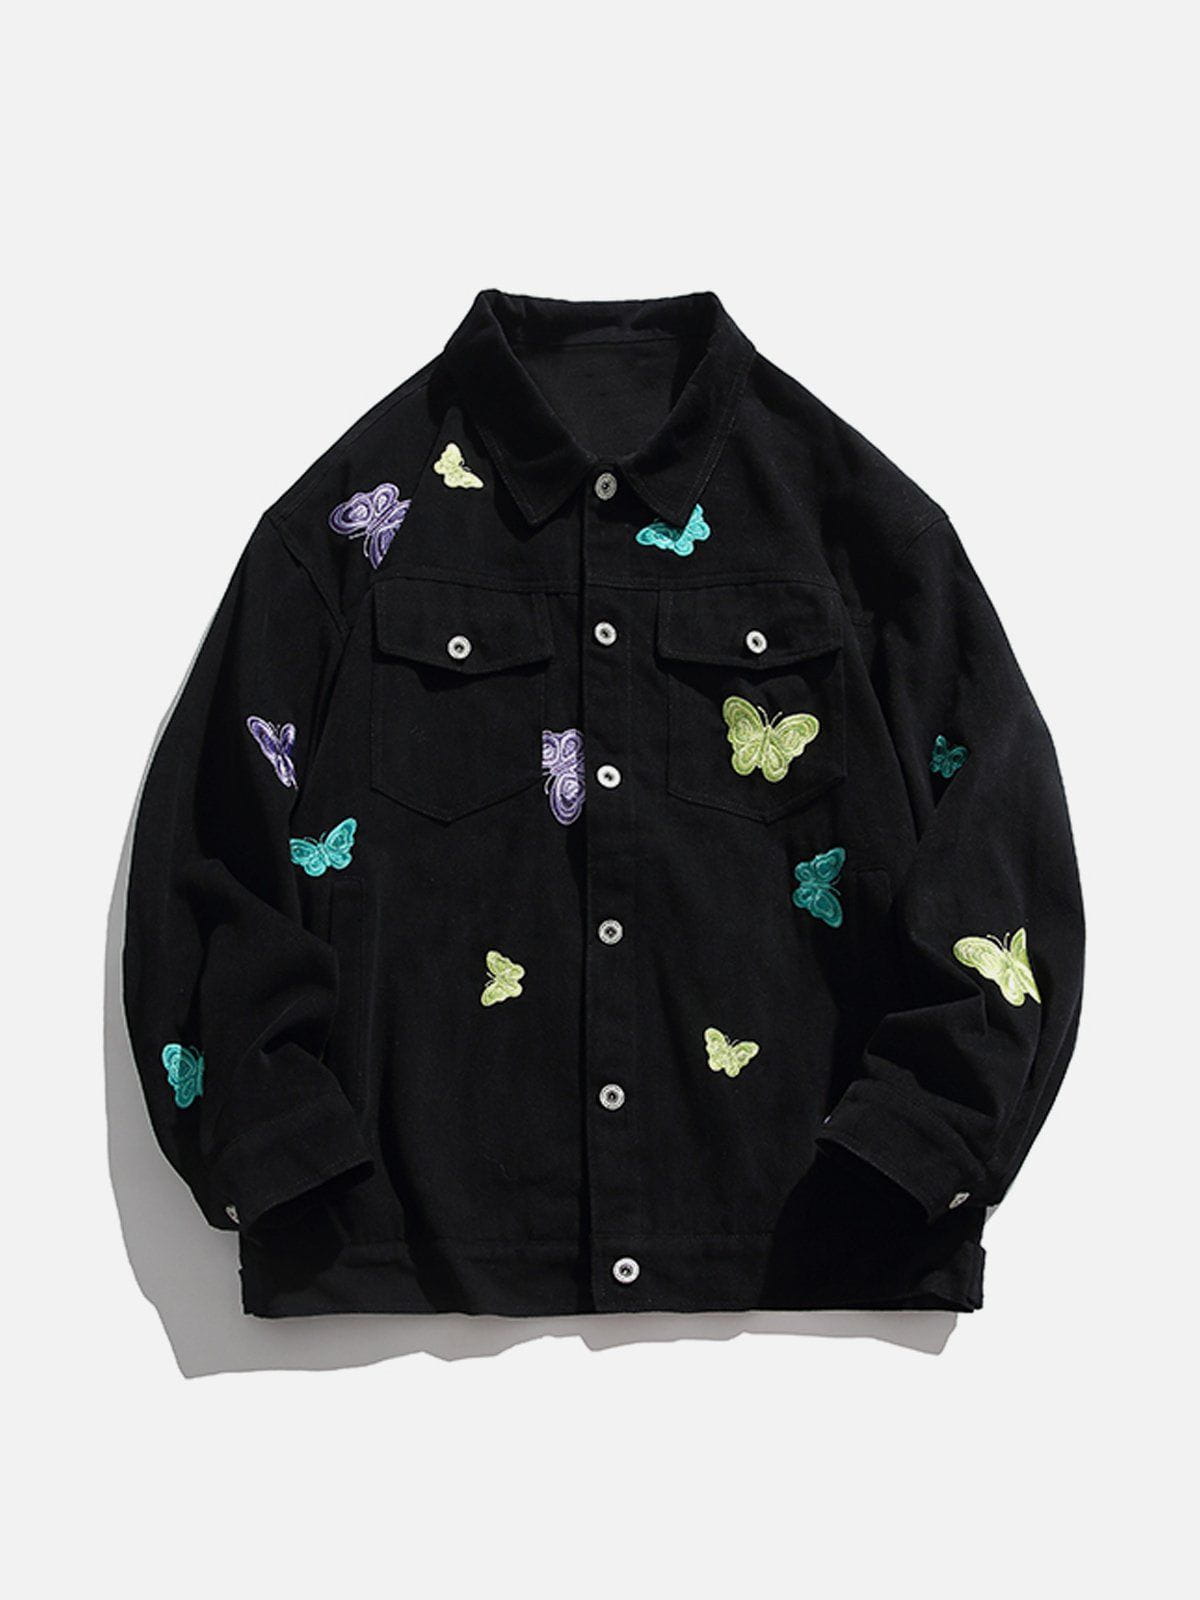 Eprezzy® - Vintage Butterfly Embroidered Jacket Streetwear Fashion - eprezzy.com